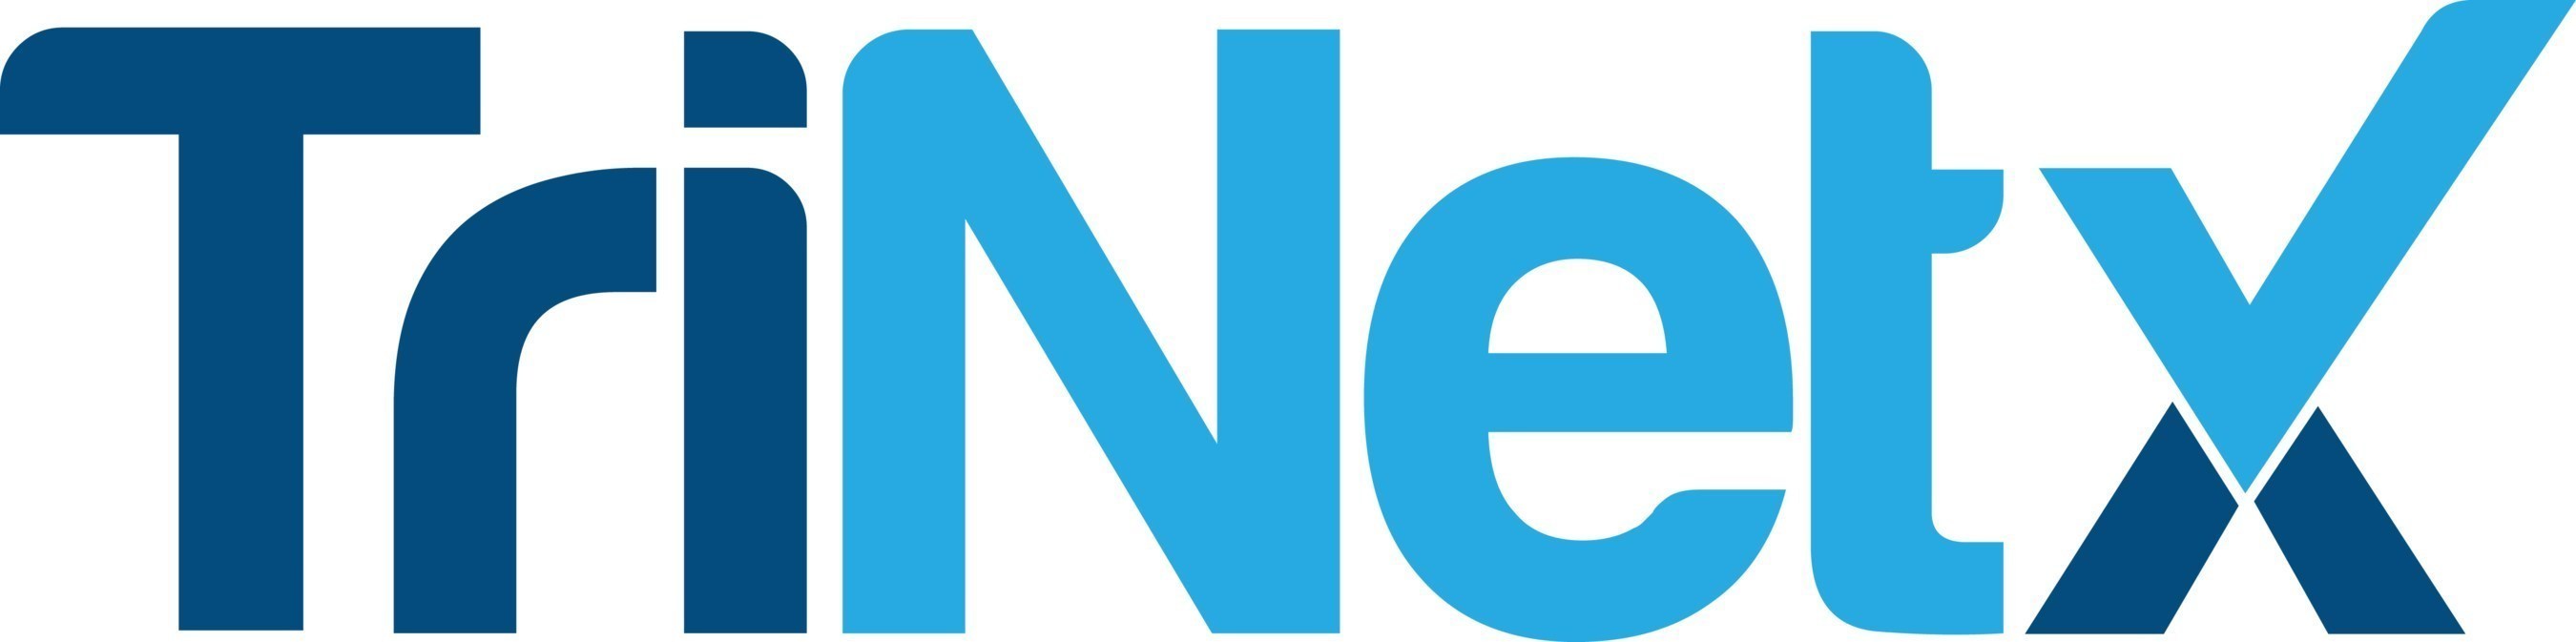 TriNetX, Inc. Logo